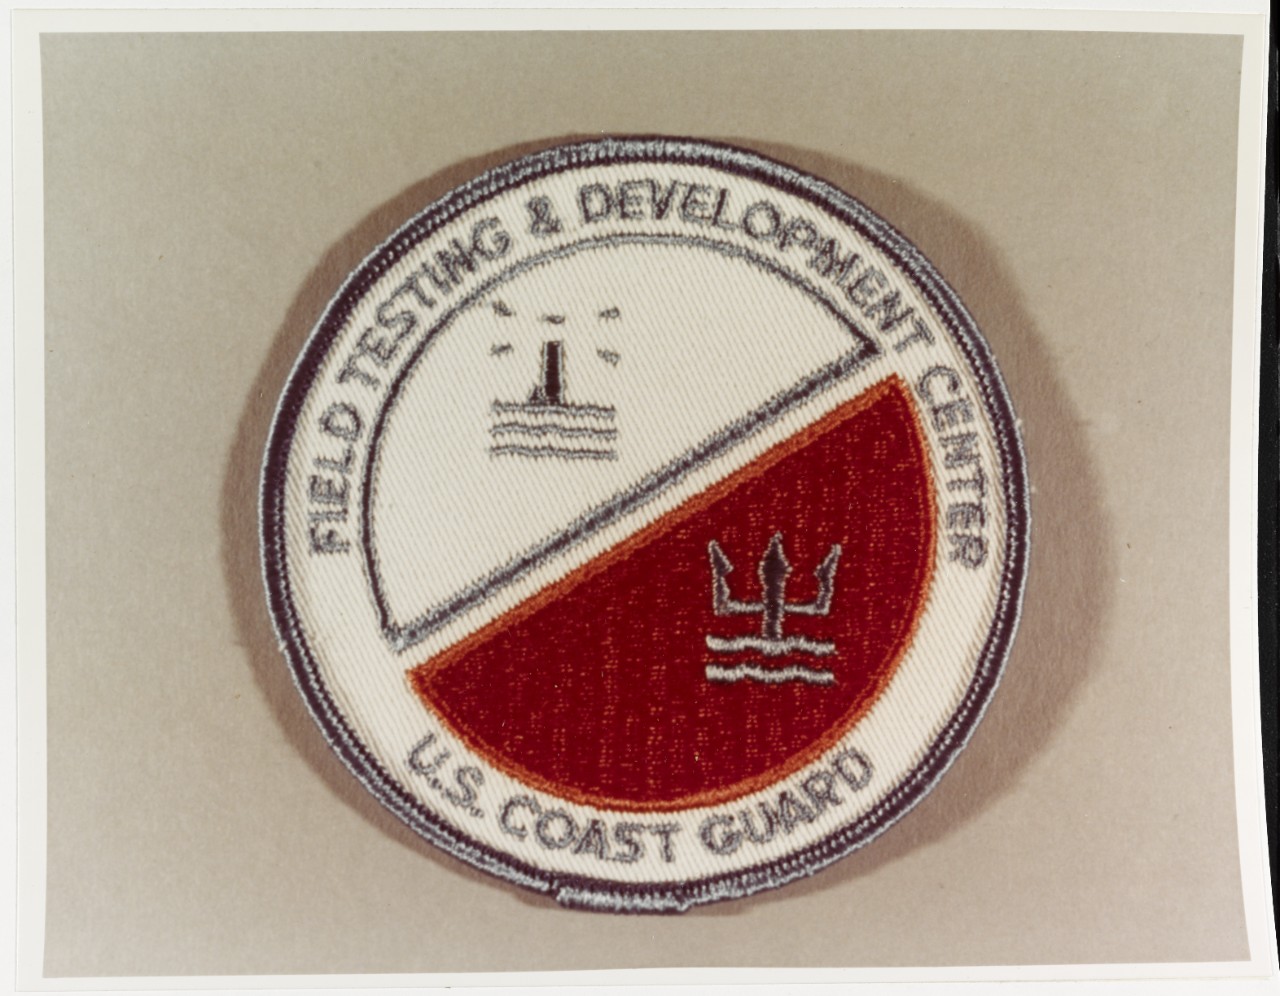 Insignia:  U.S. Coast Guard Field Testing and Development Center, New London, Connecticut